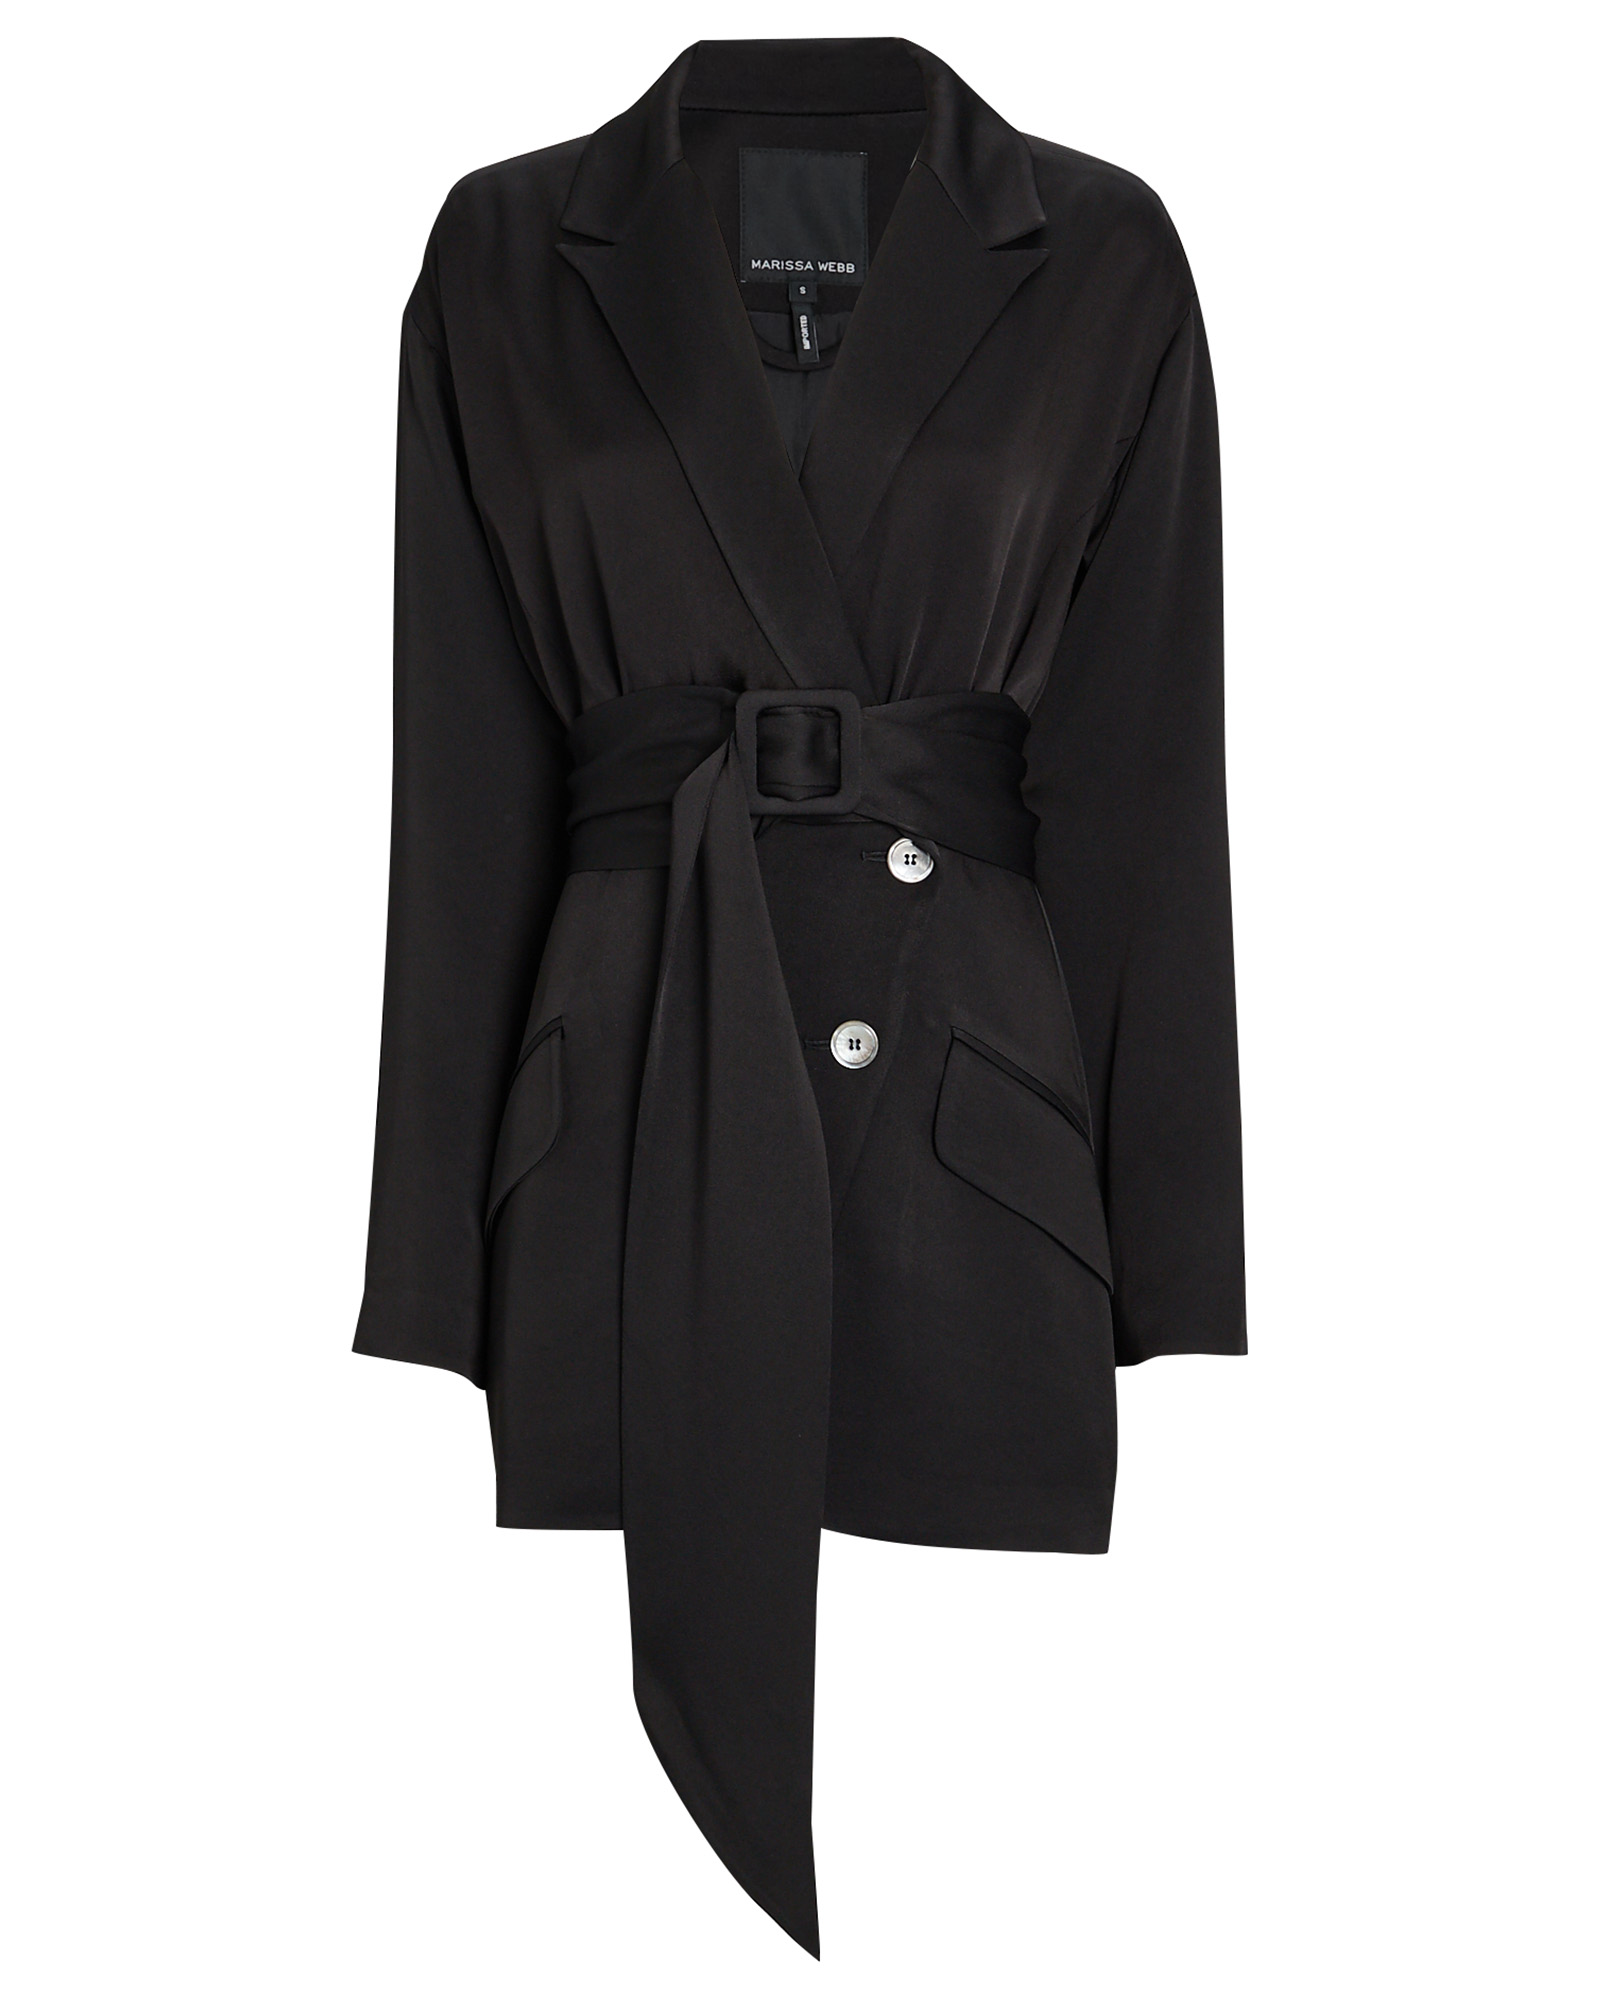 Marissa Webb Cyrus Satin Suit Dress In Black | ModeSens